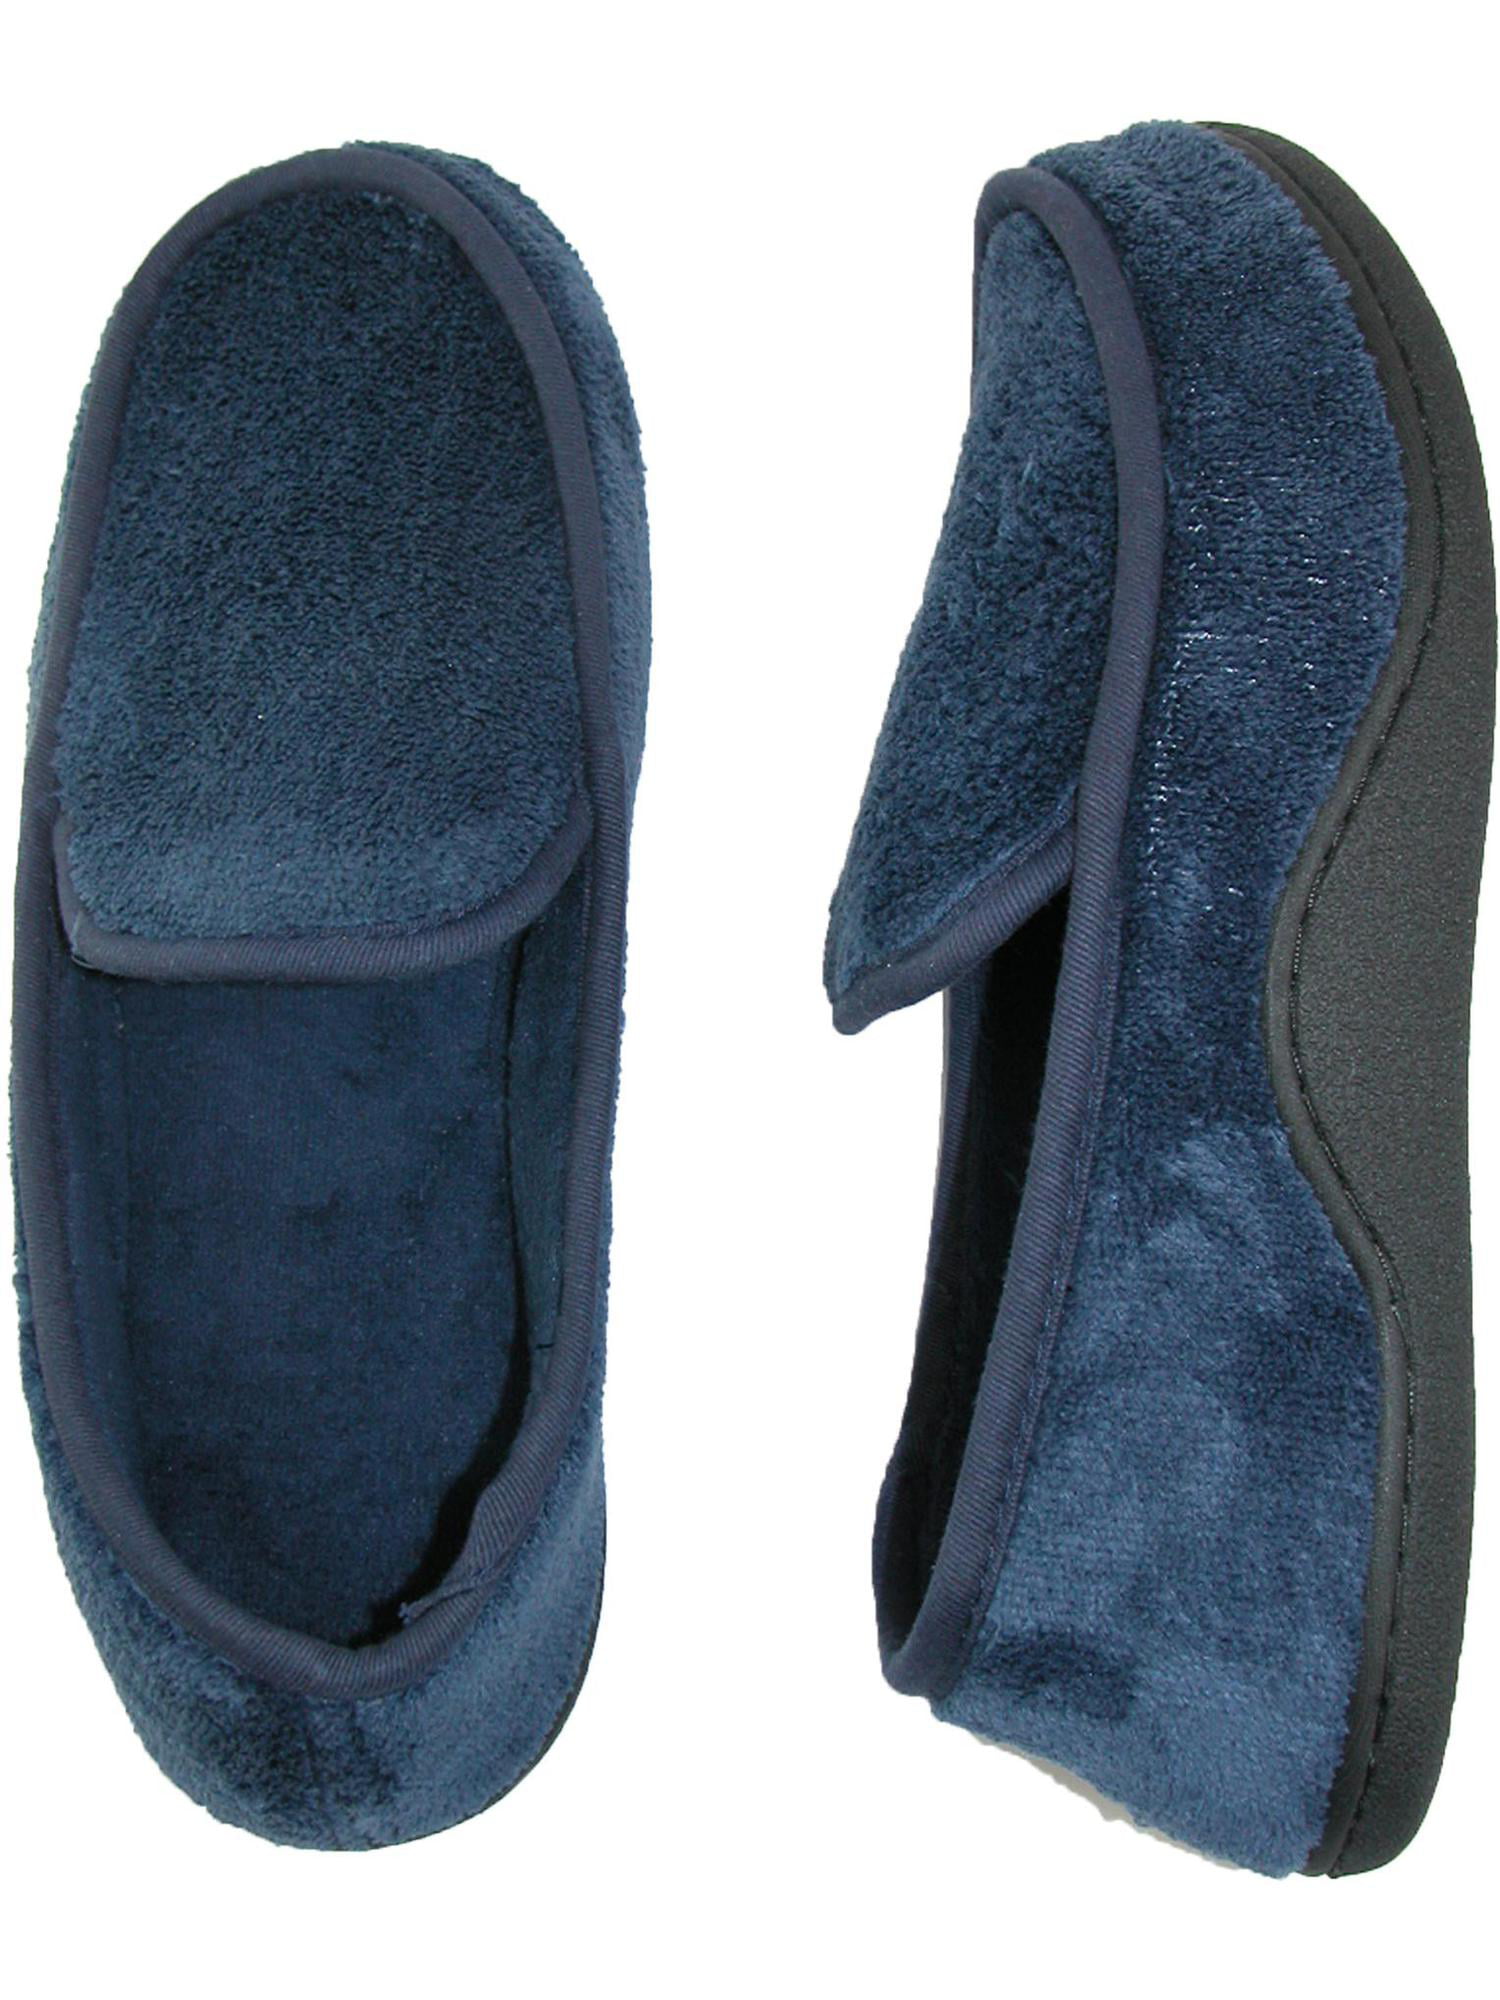 Isotoner Men's Open Back Slipper with Memory Foam and Indoor/Outdoor Sole Slip on